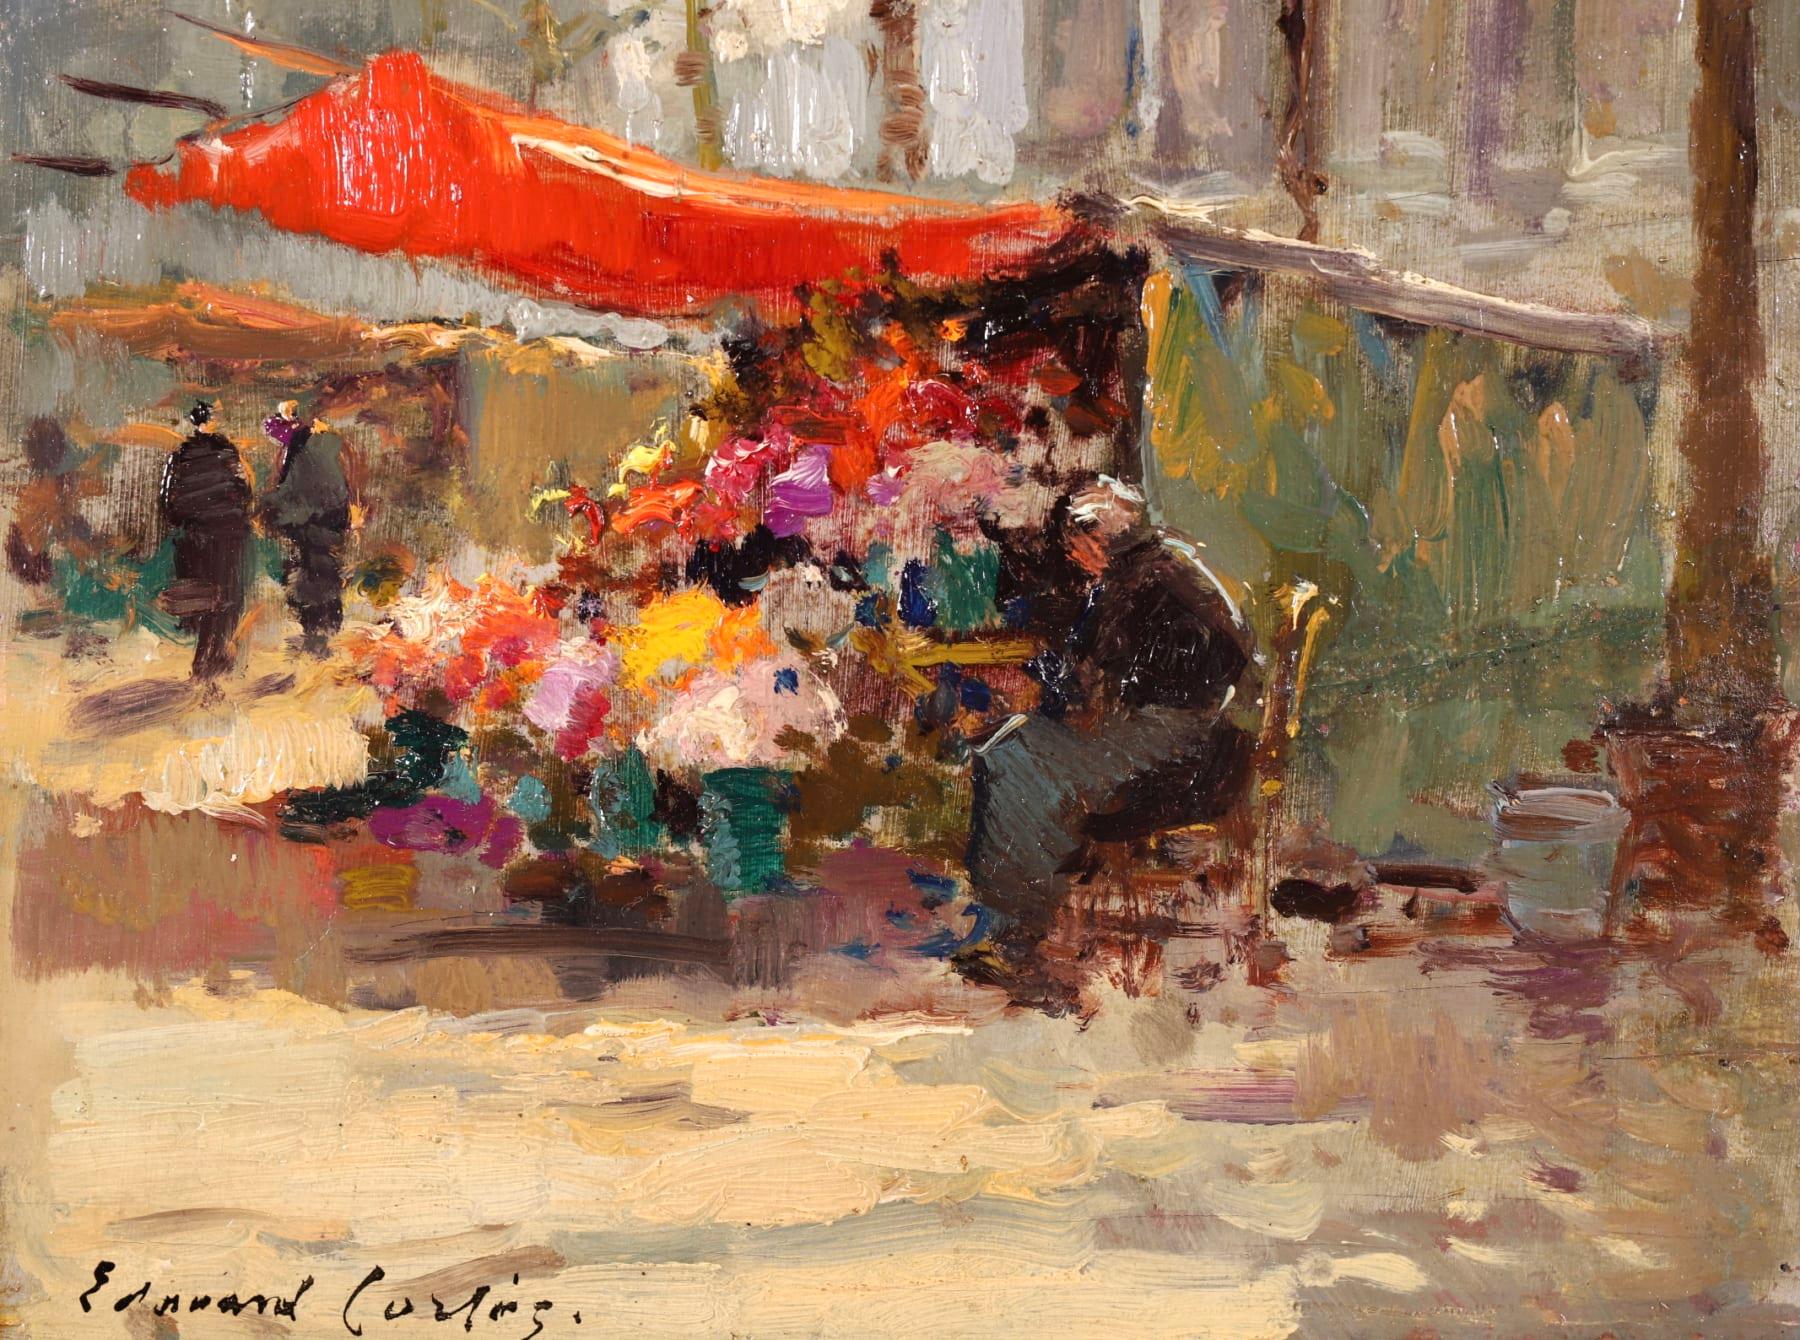 Flower Market - Impressionist Oil, Figures in Cityscape by Edouard Cortès 4